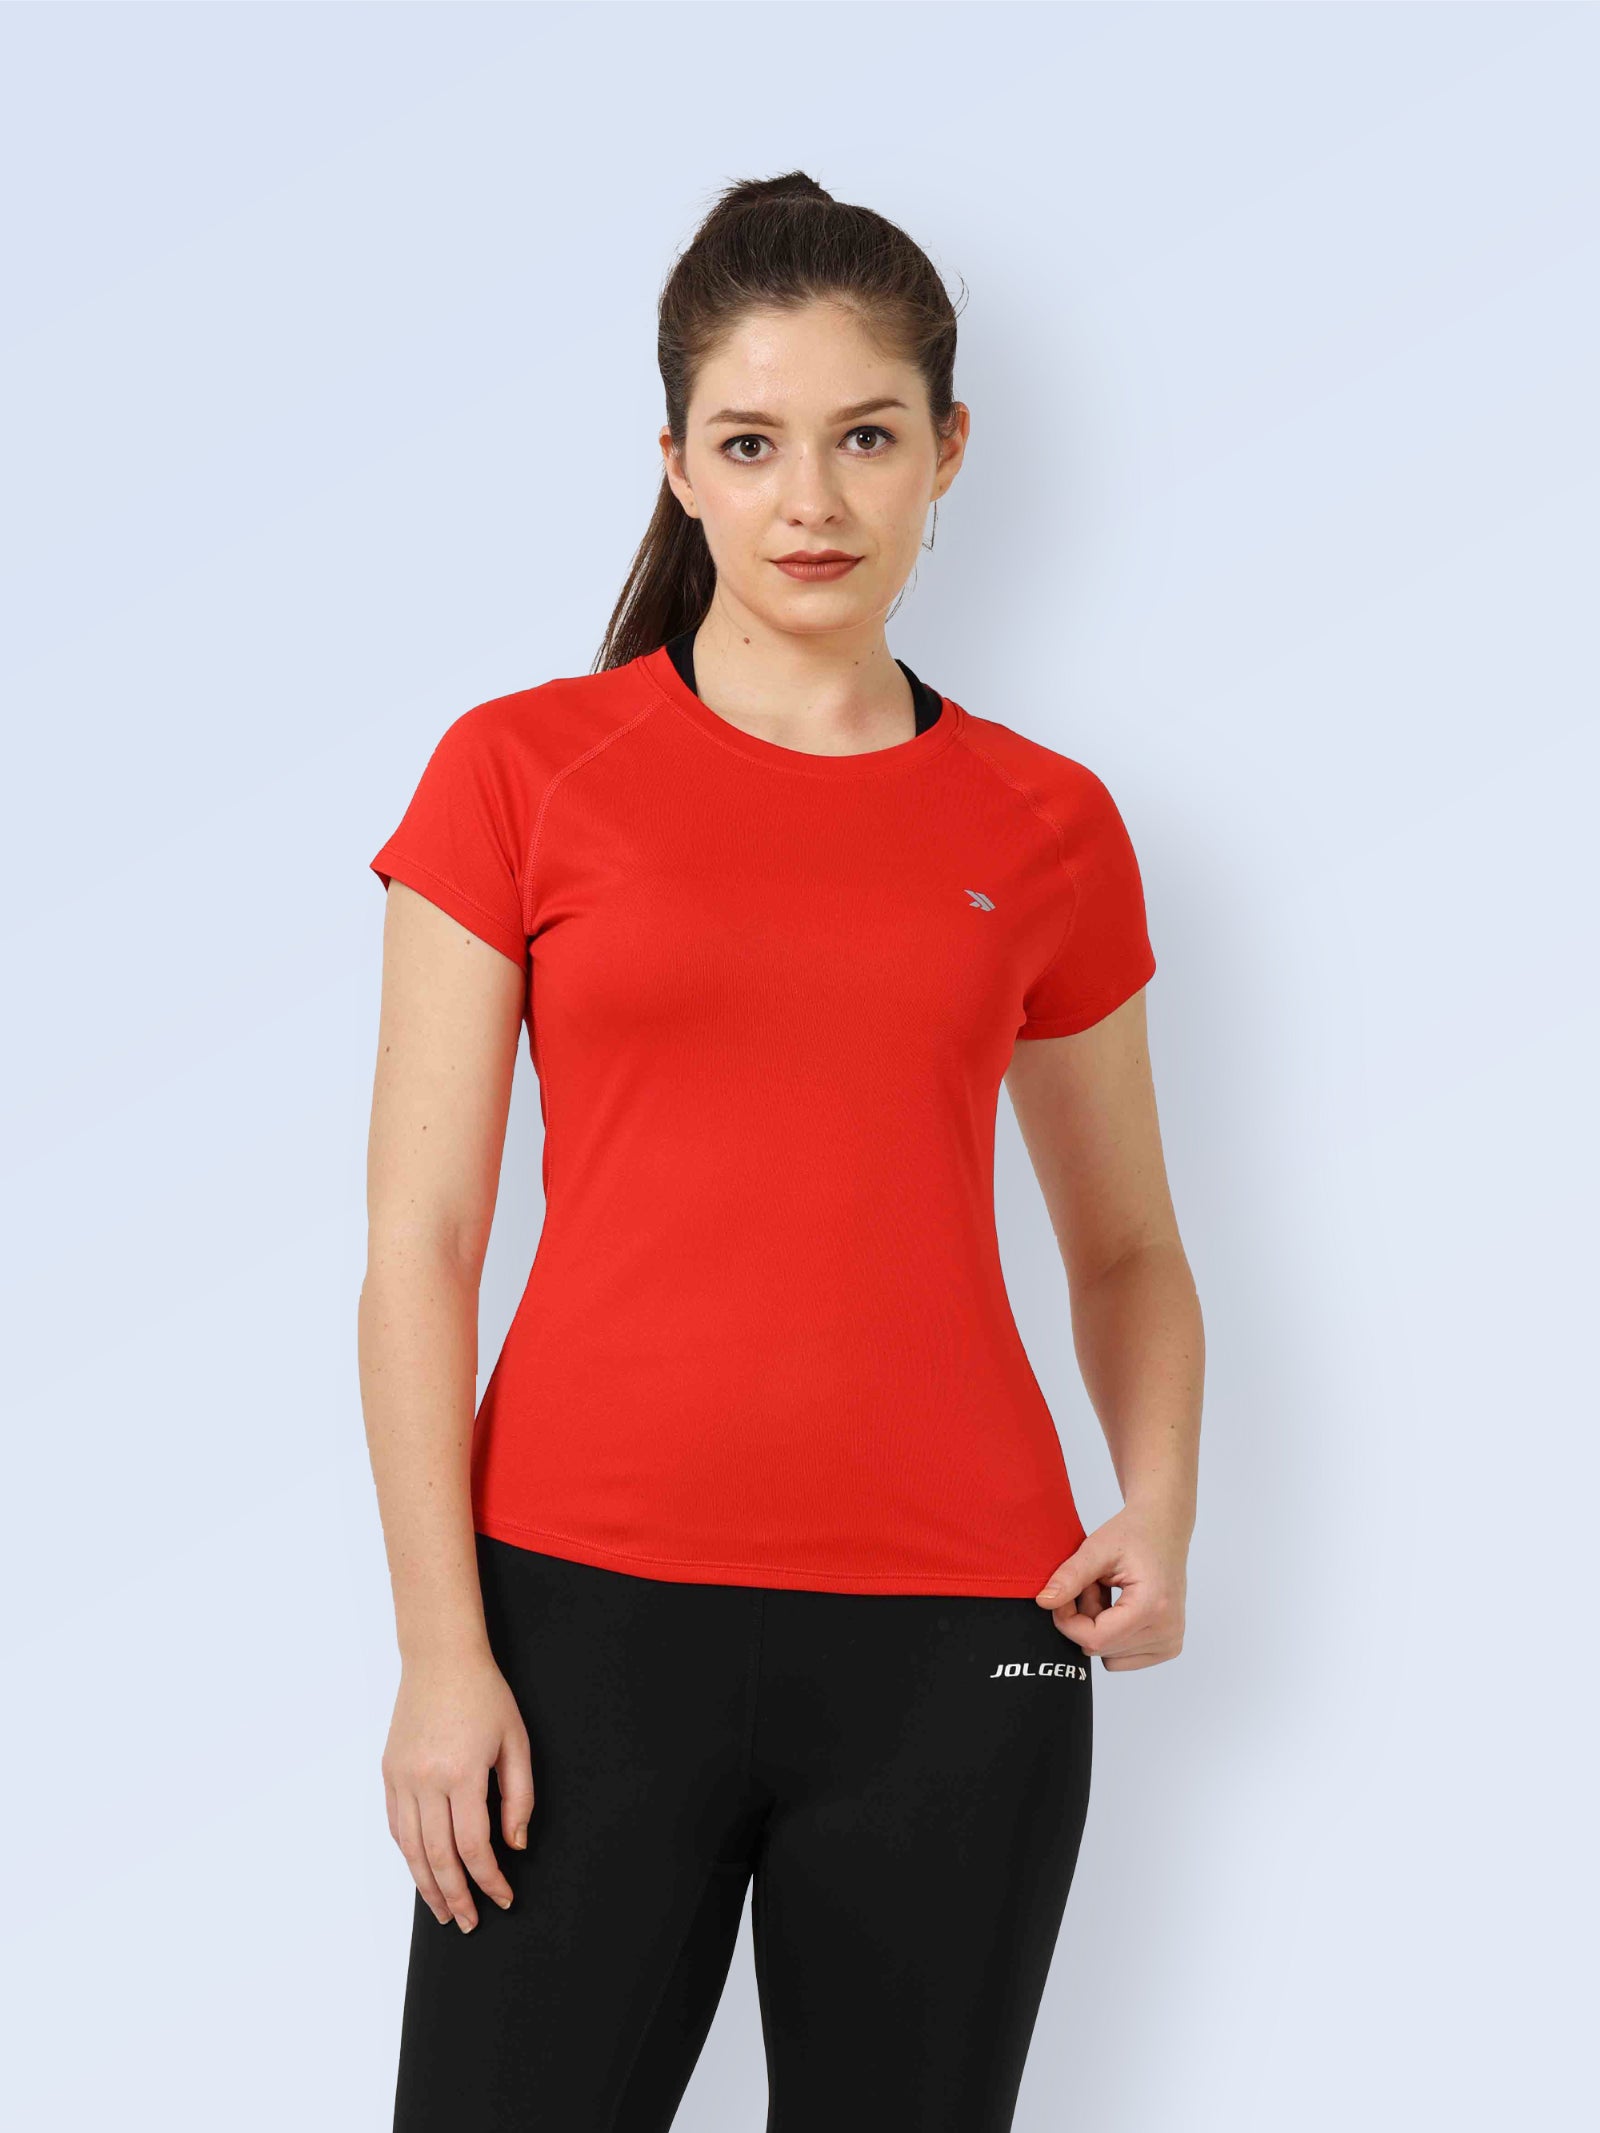 Gubotare Valentines Gym Shirts For Women Women's T-shirt, Sport Cool DRI  Performance Short Sleeve V-Neck Shirt,Red S 